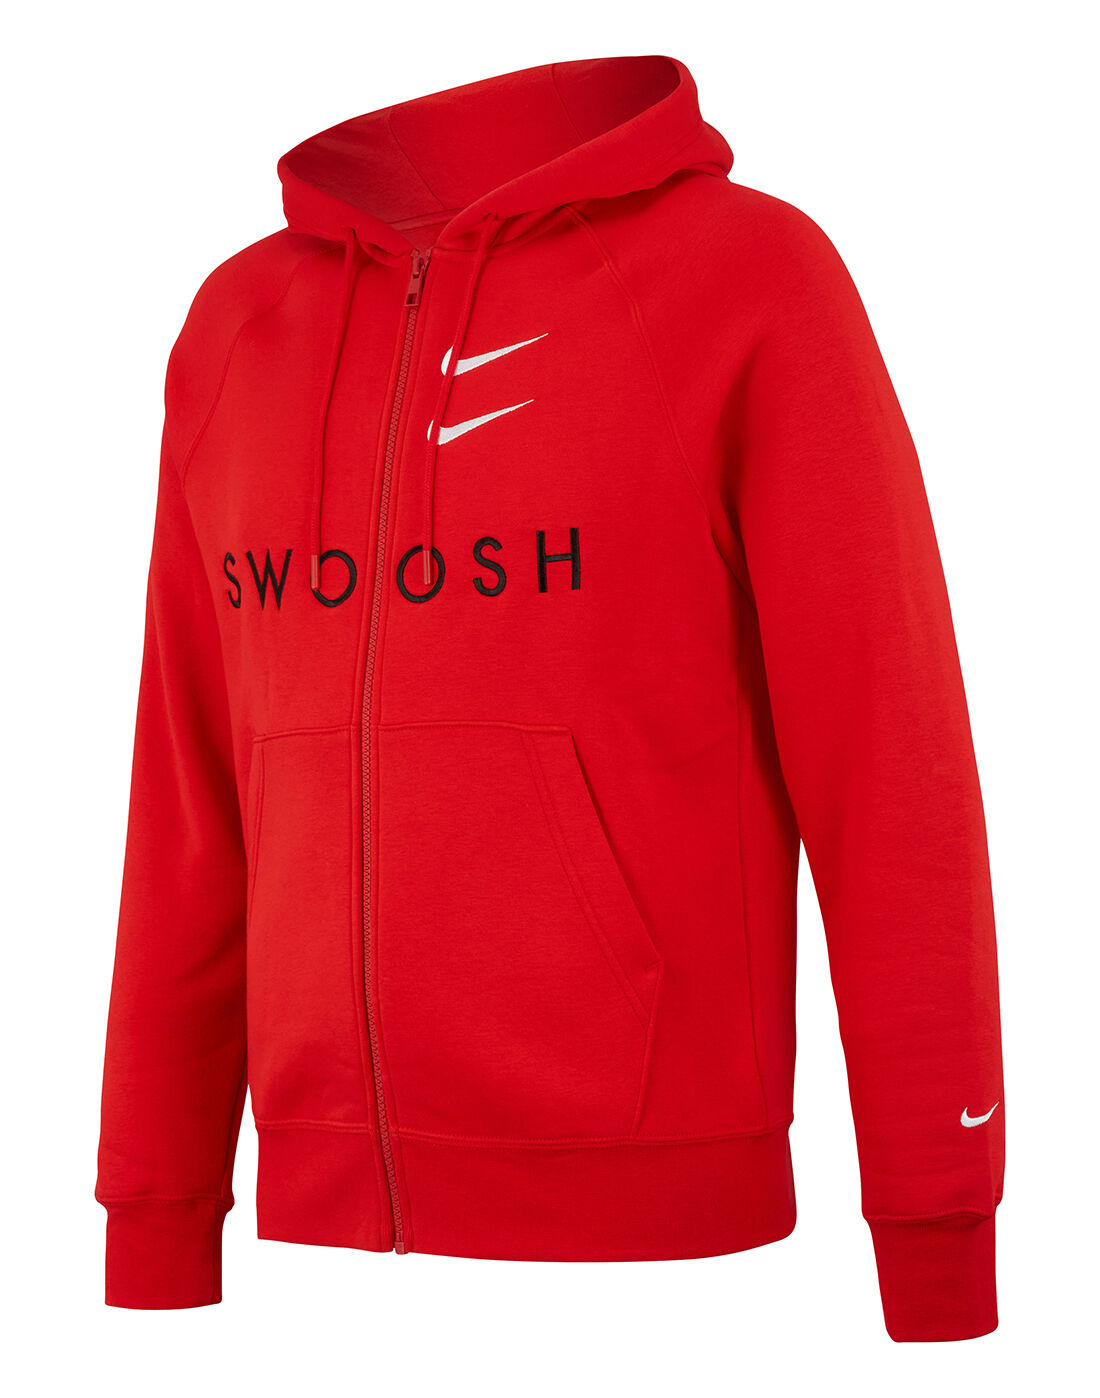 red and white nike swoosh hoodie